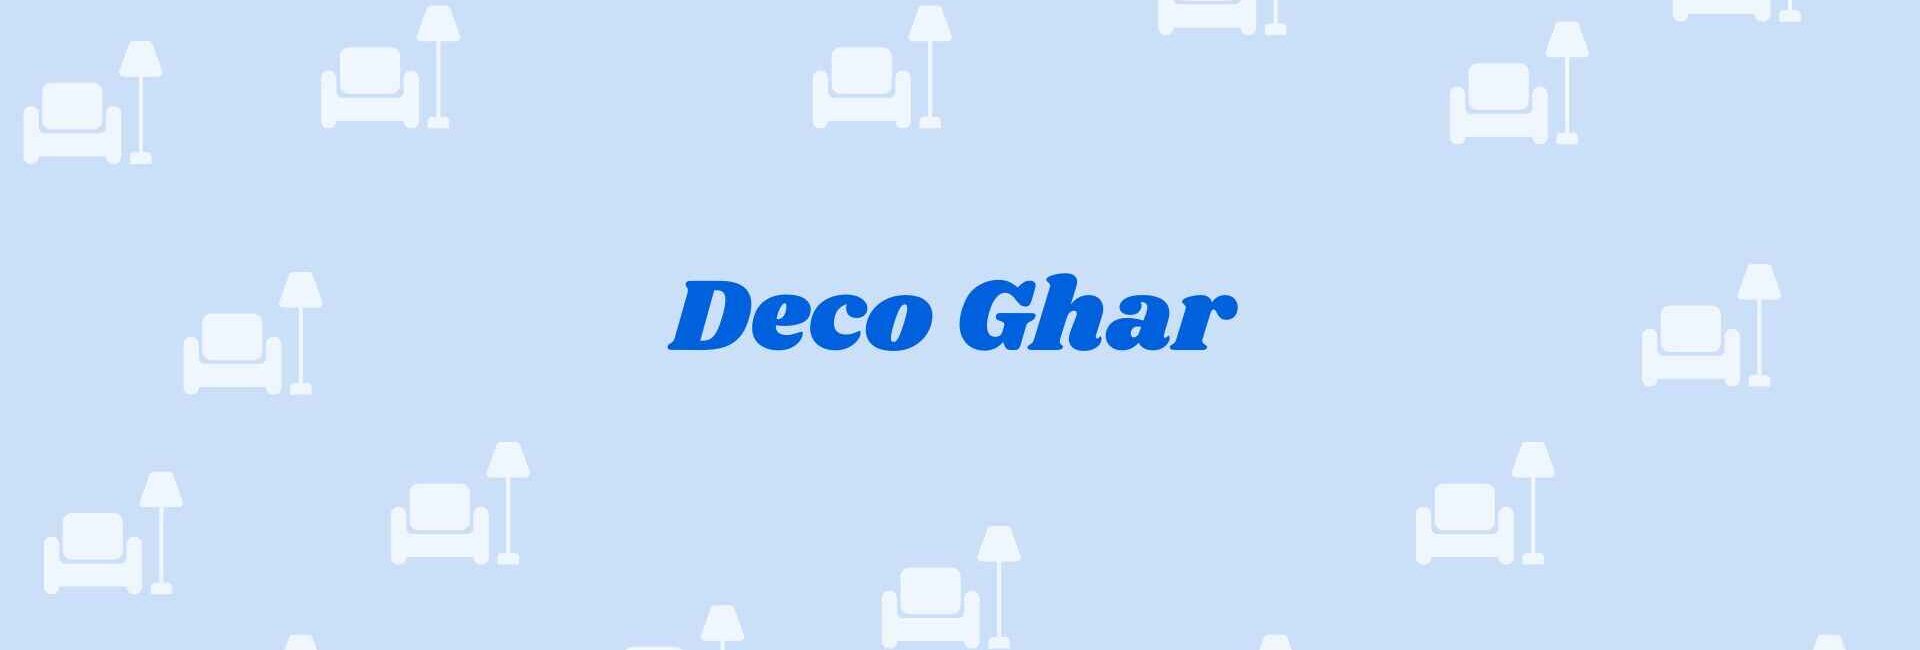 Deco Ghar - home decor dealers in noida